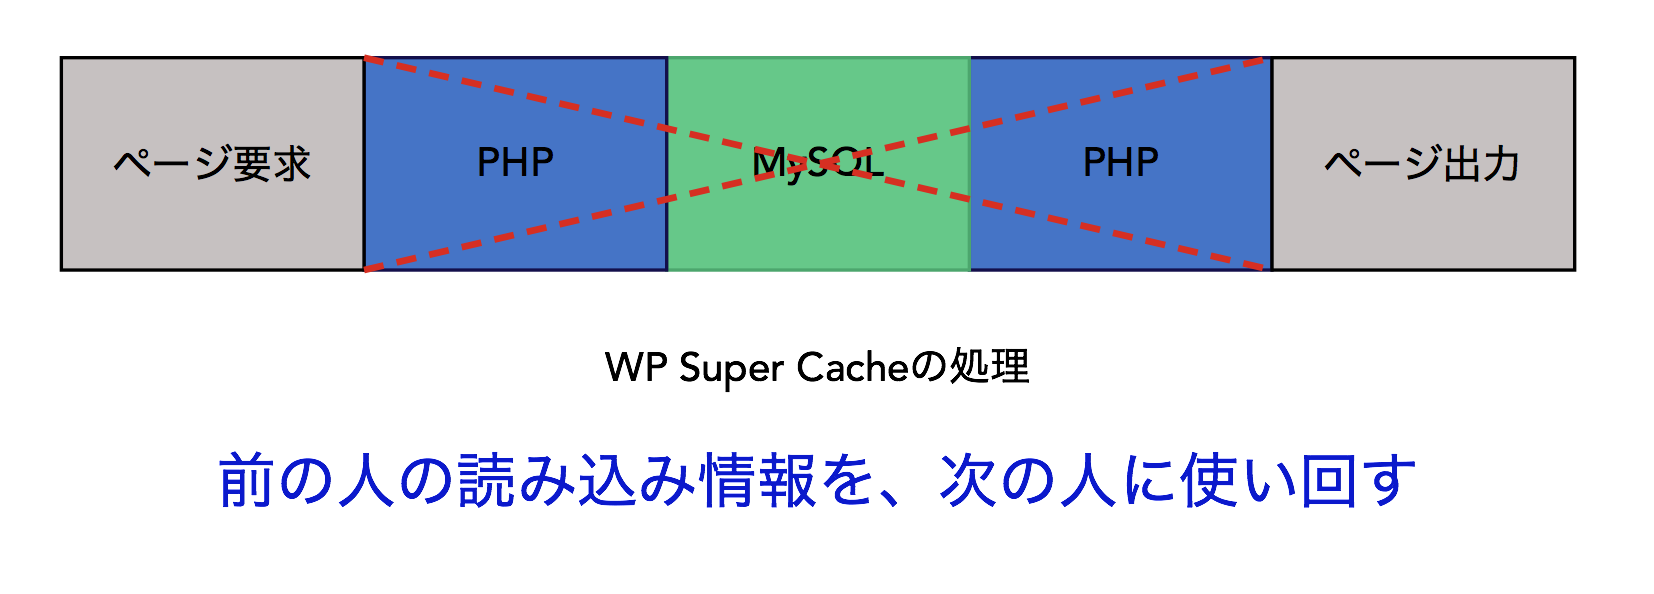 WP Super Cacheの処理